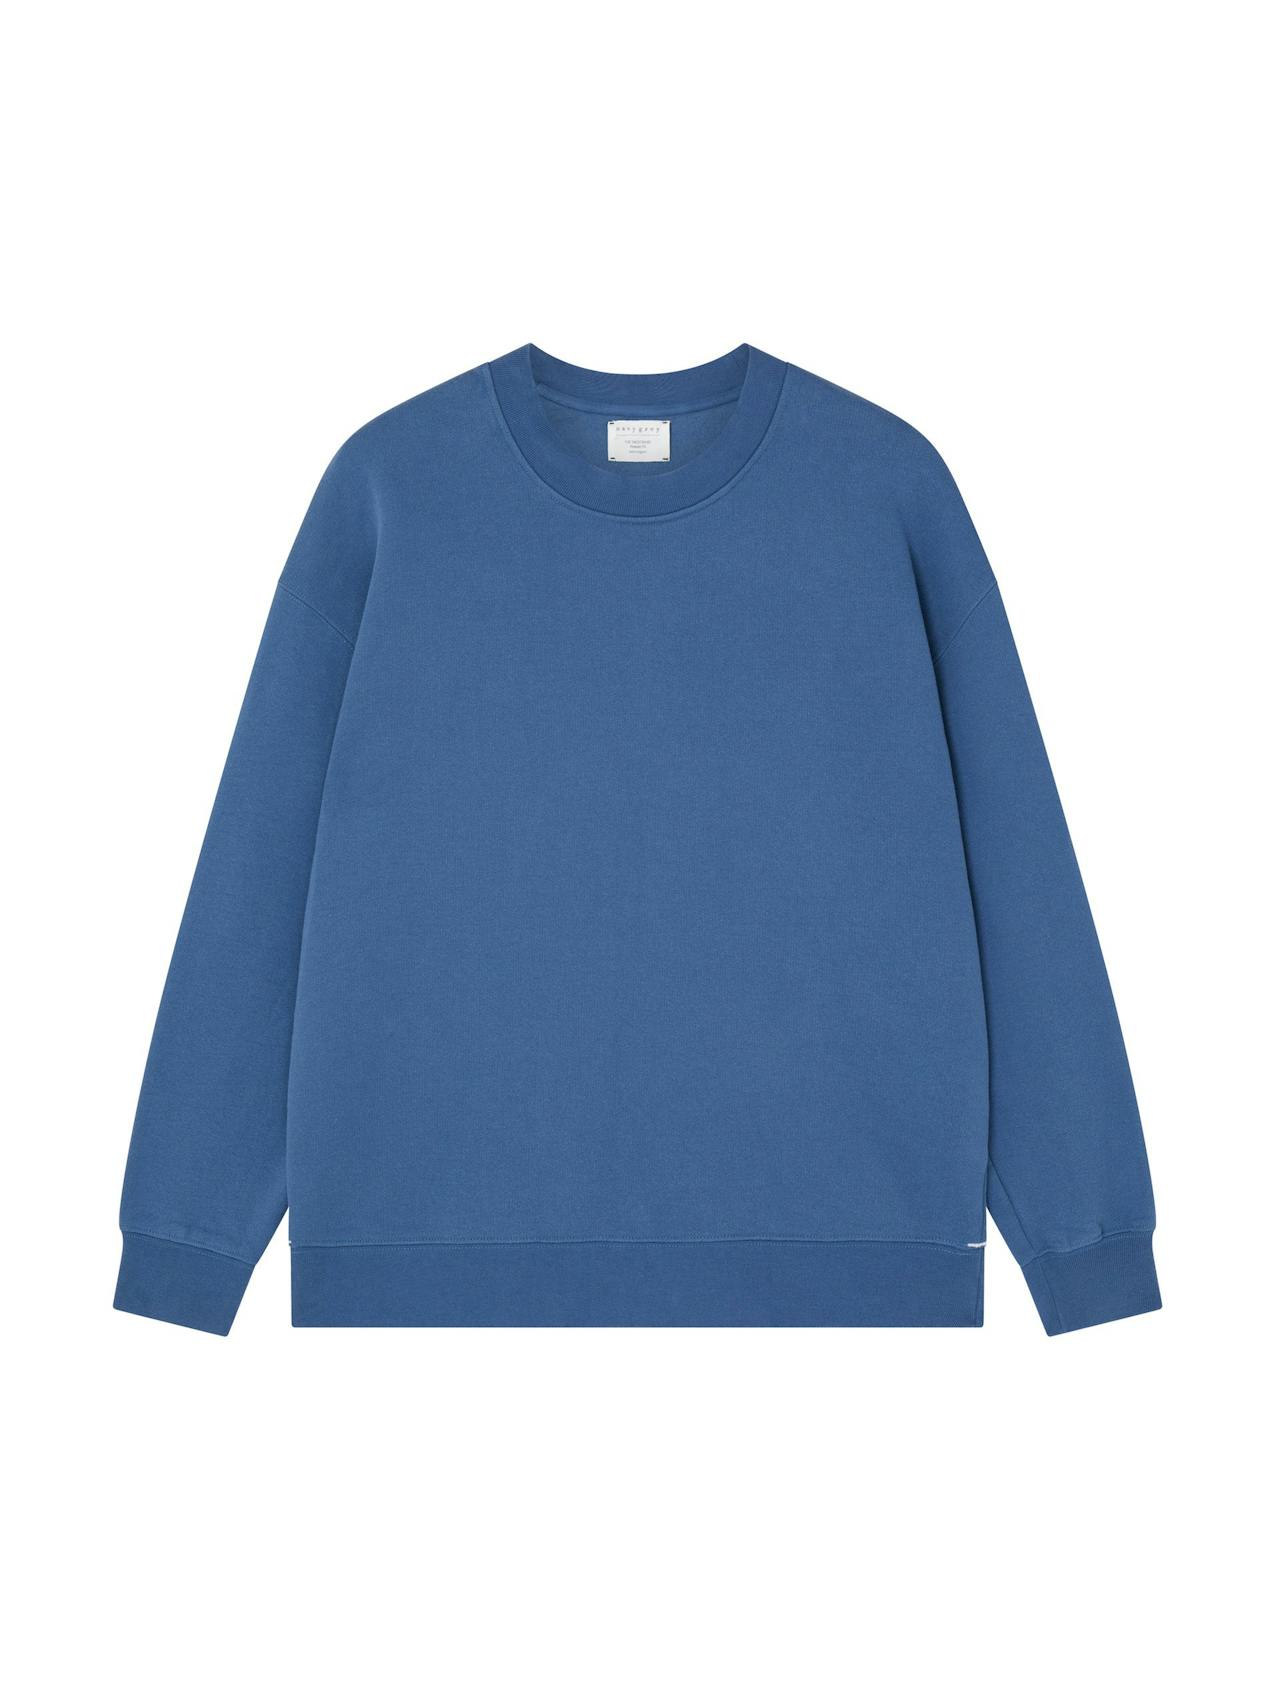 Ocean blue relaxed-fit sweatshirt